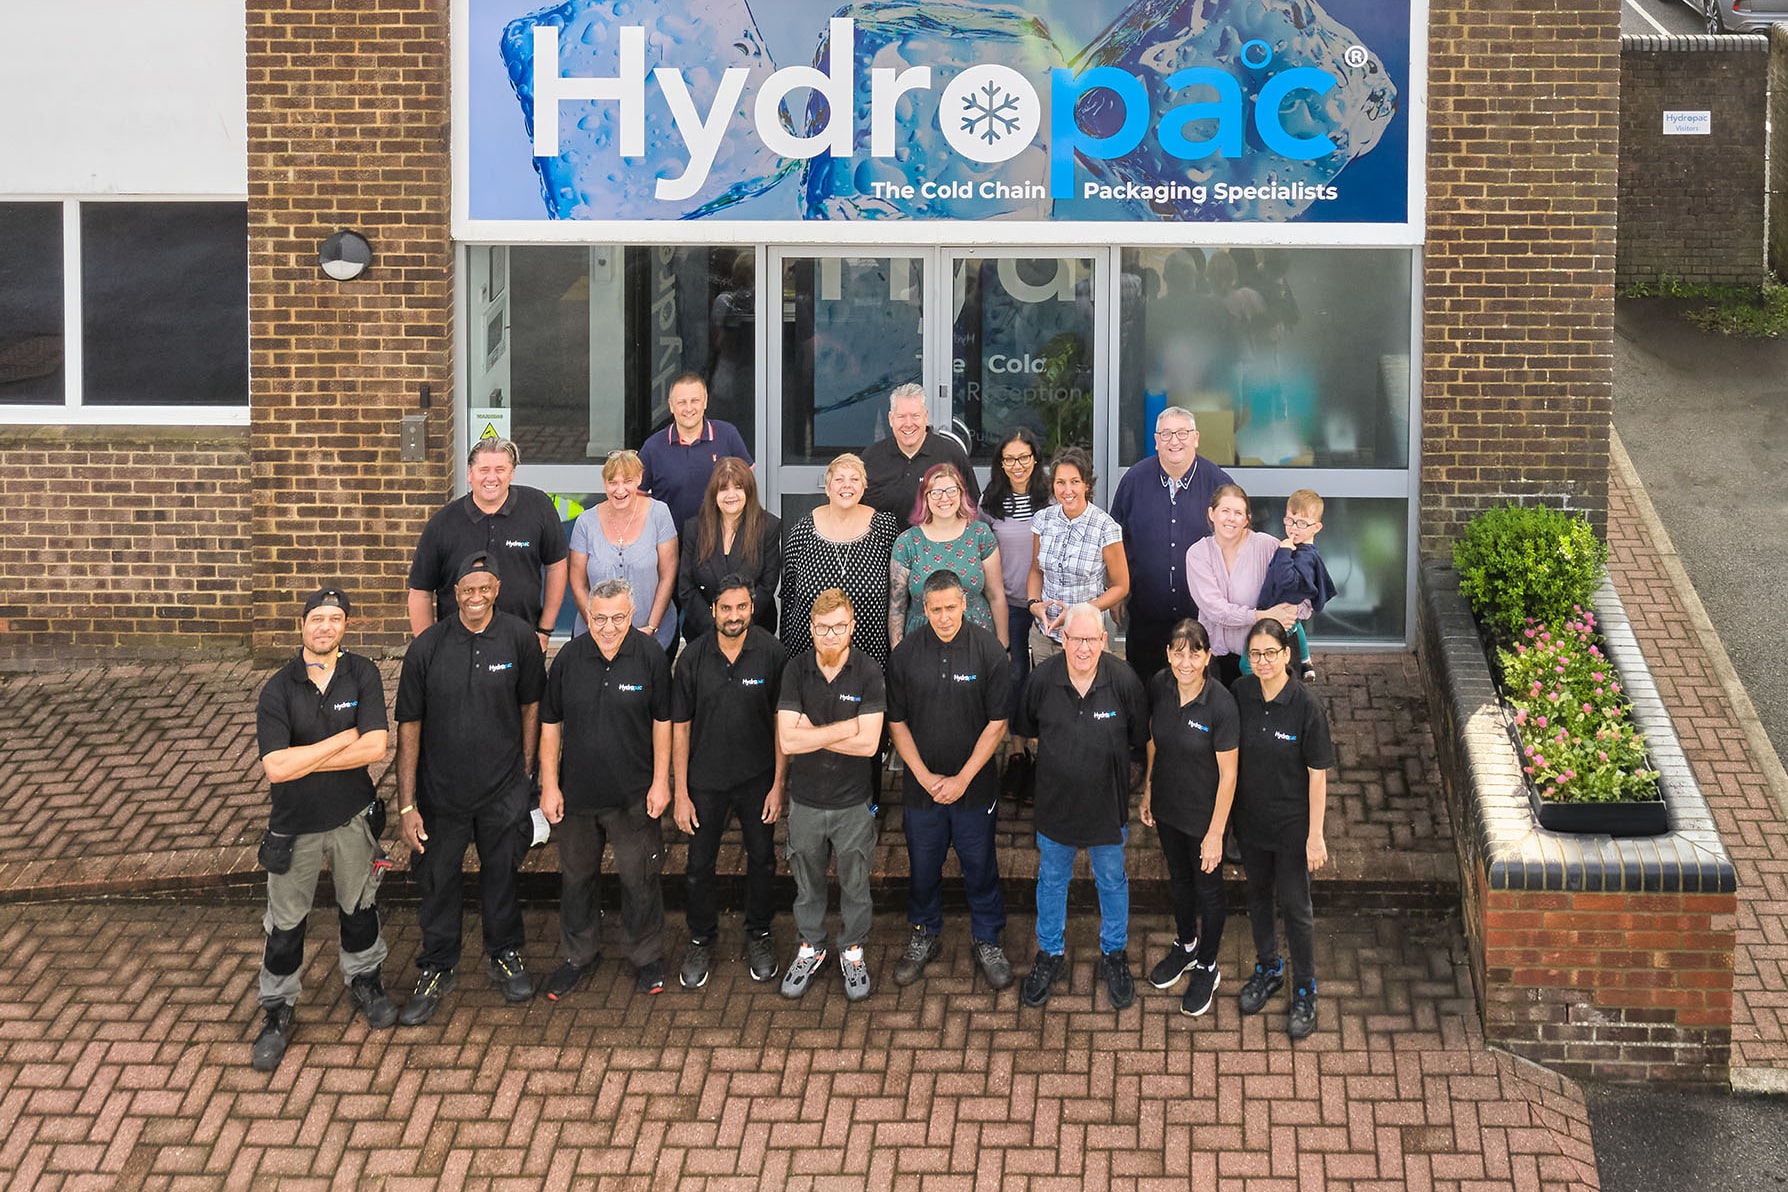 Hydropac Group shot